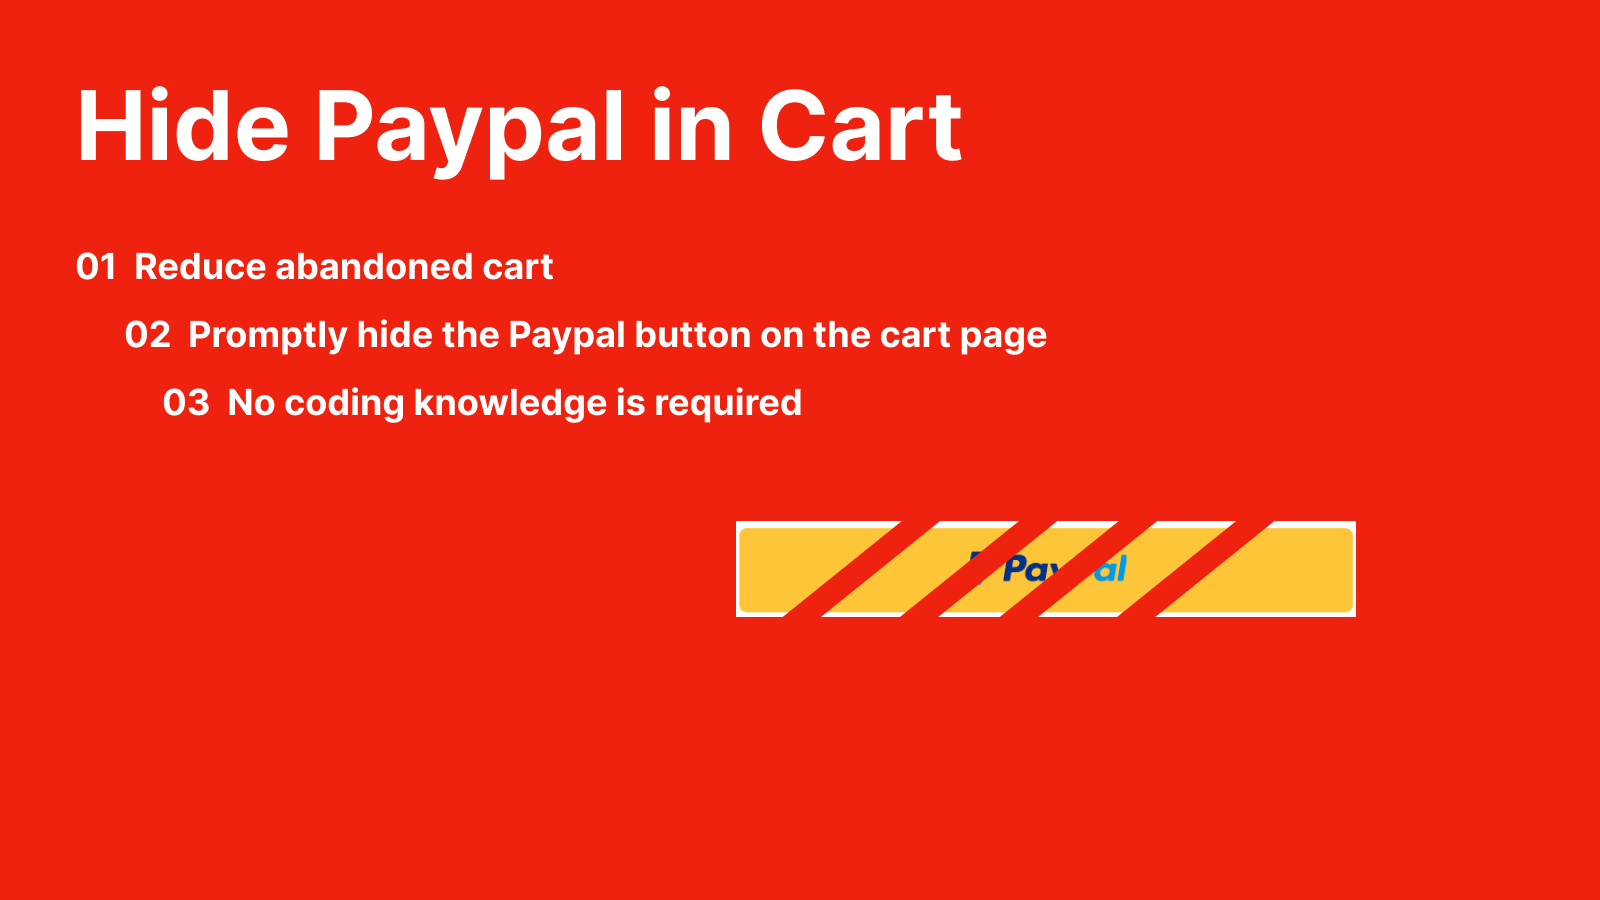 Hide paypal in Cart